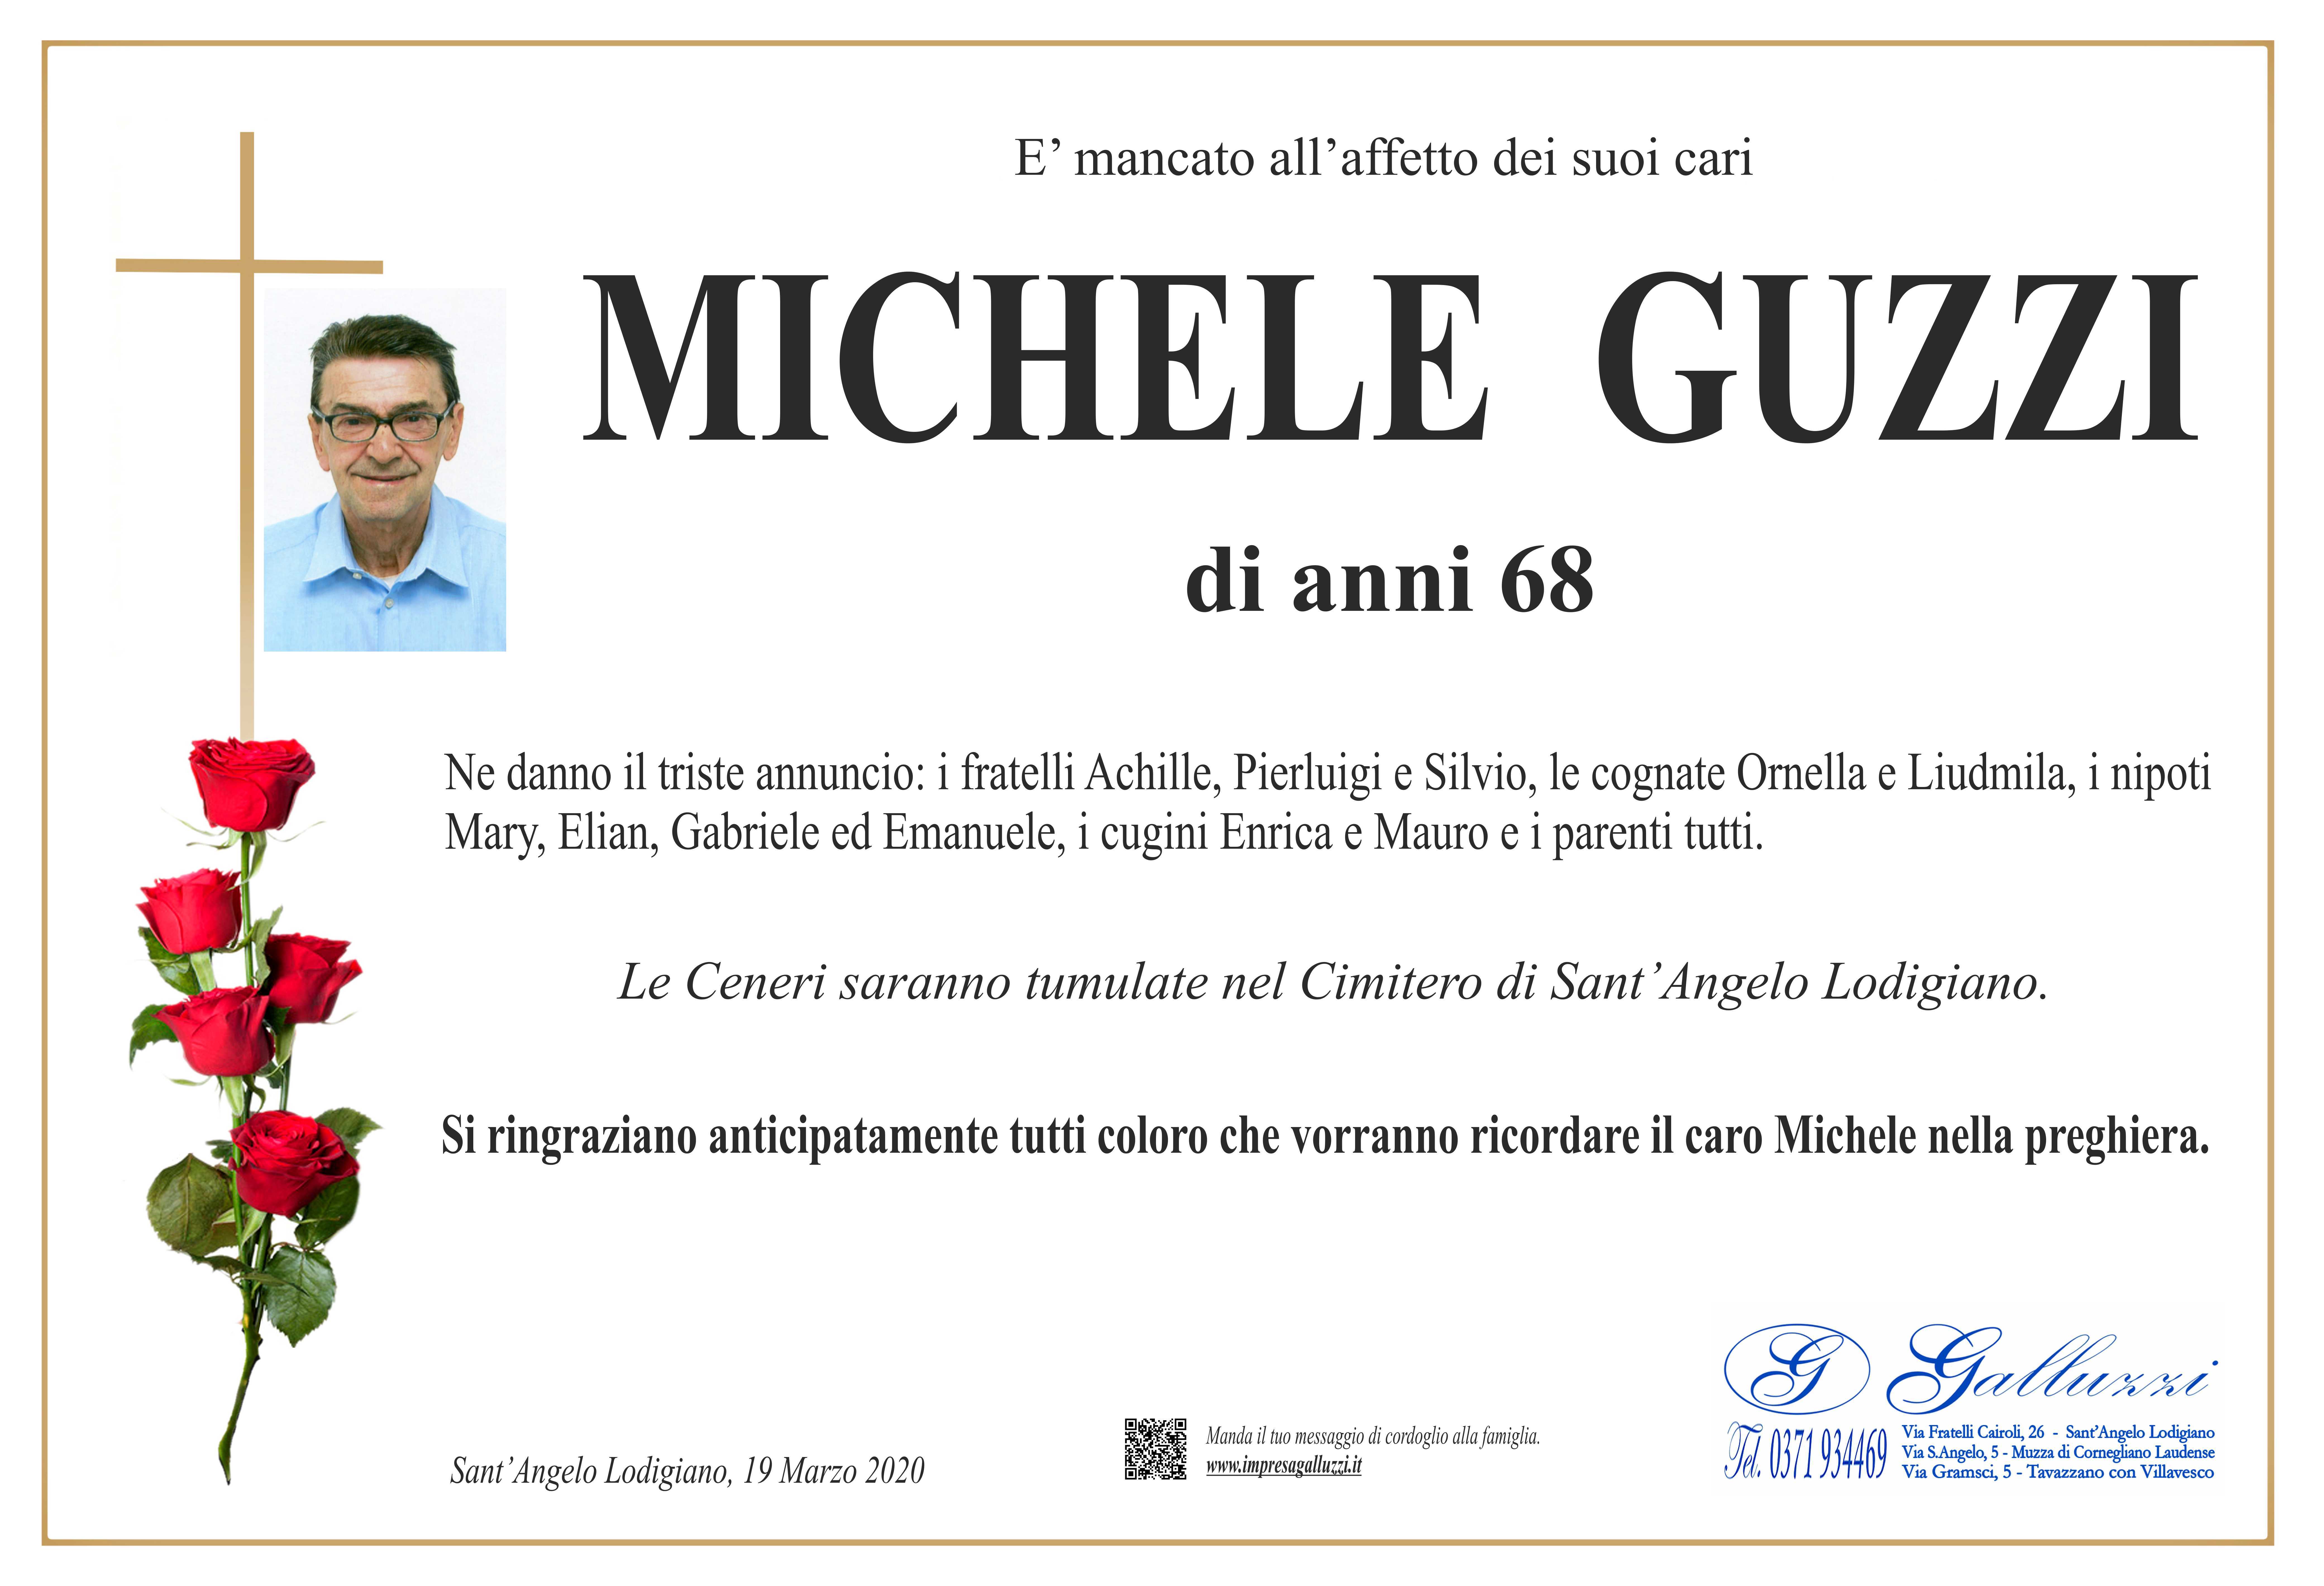 Michele Guzzi